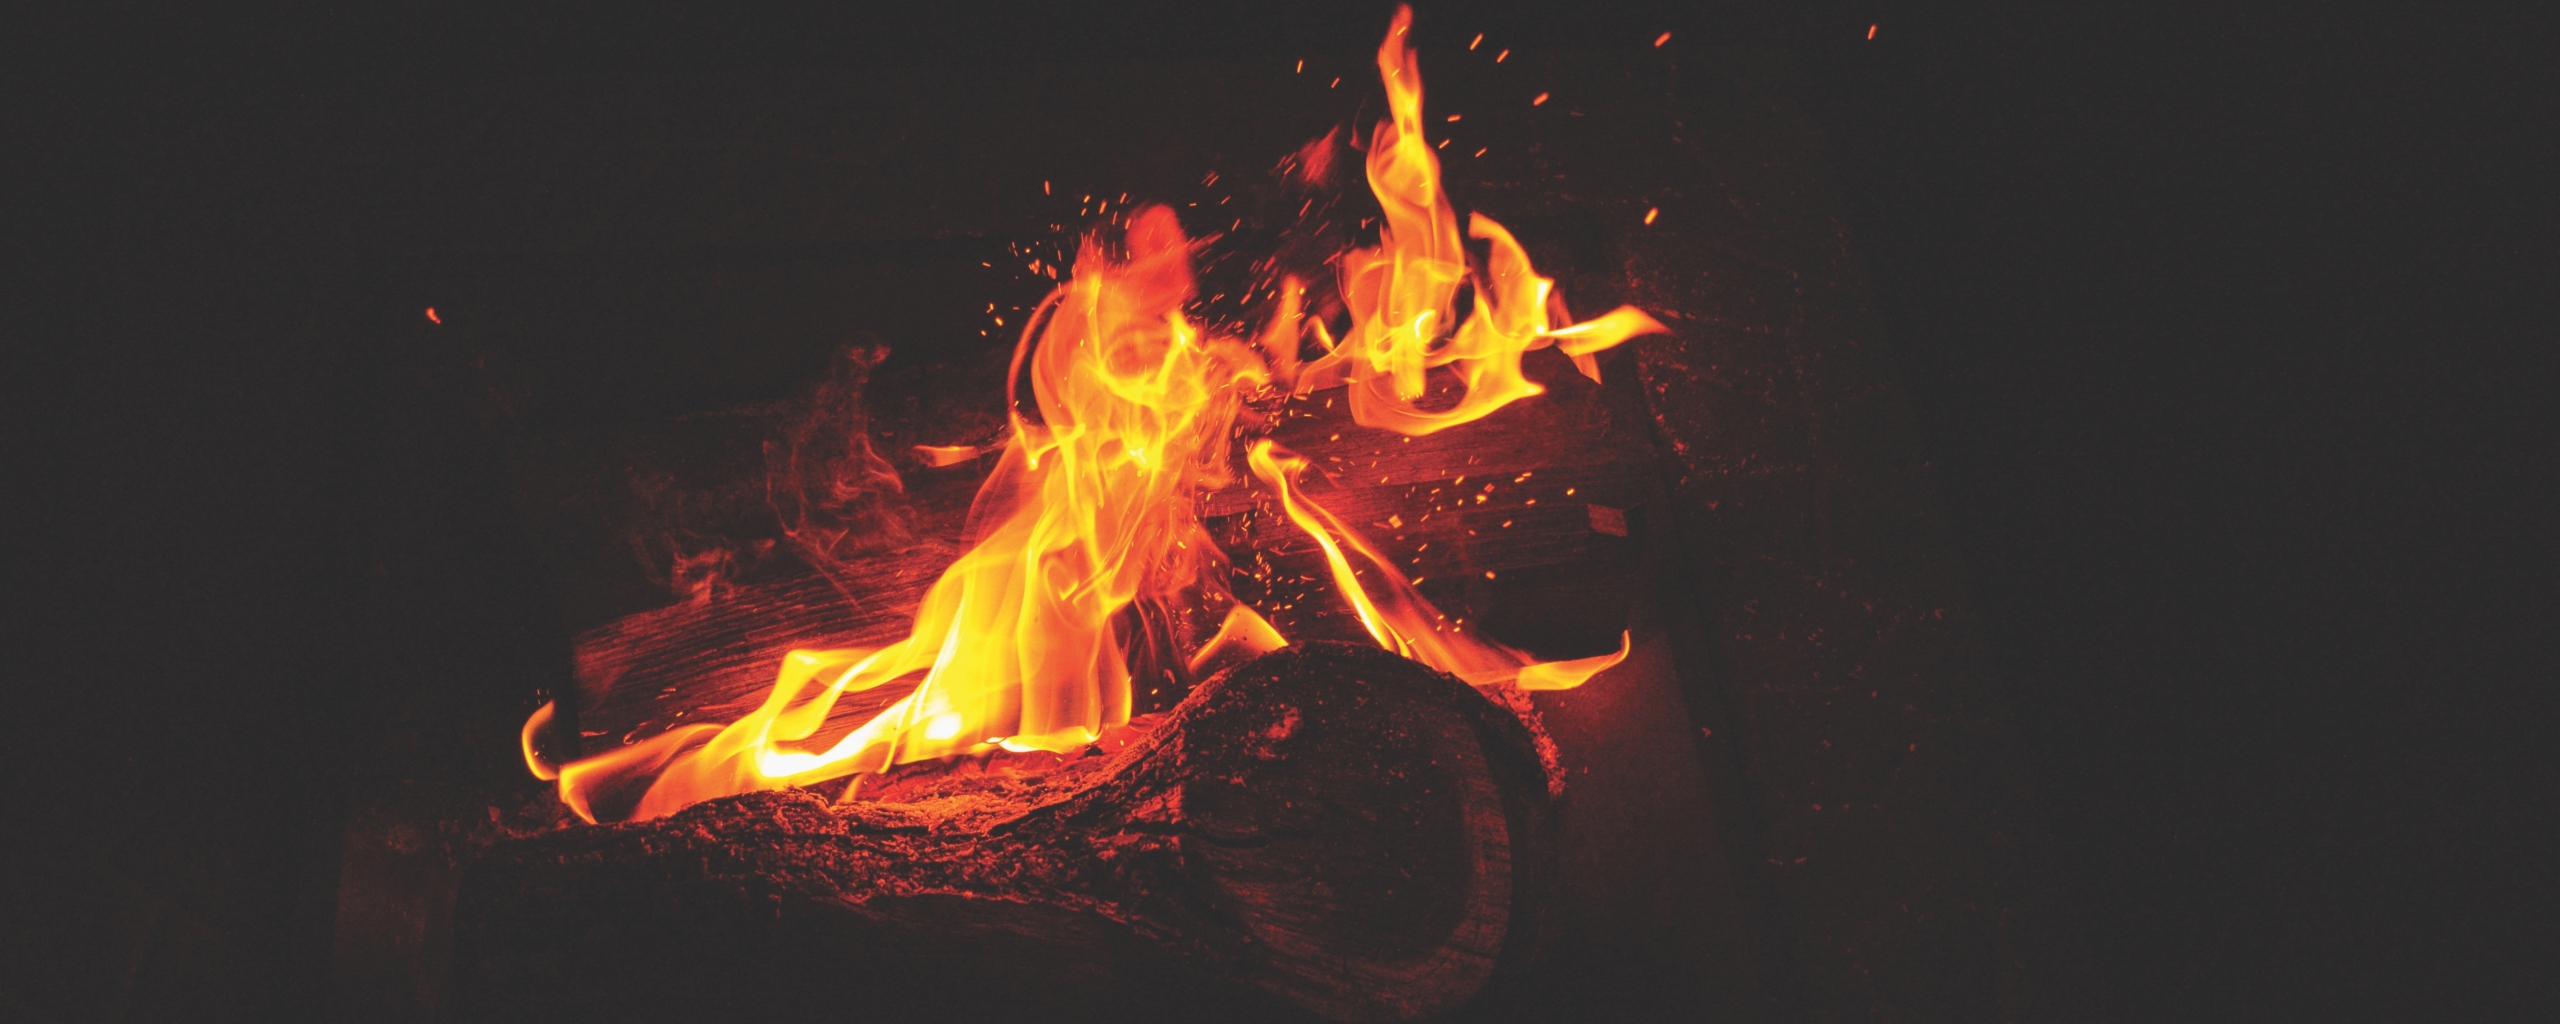 Wallpaper Bonfire Flame Night Dual